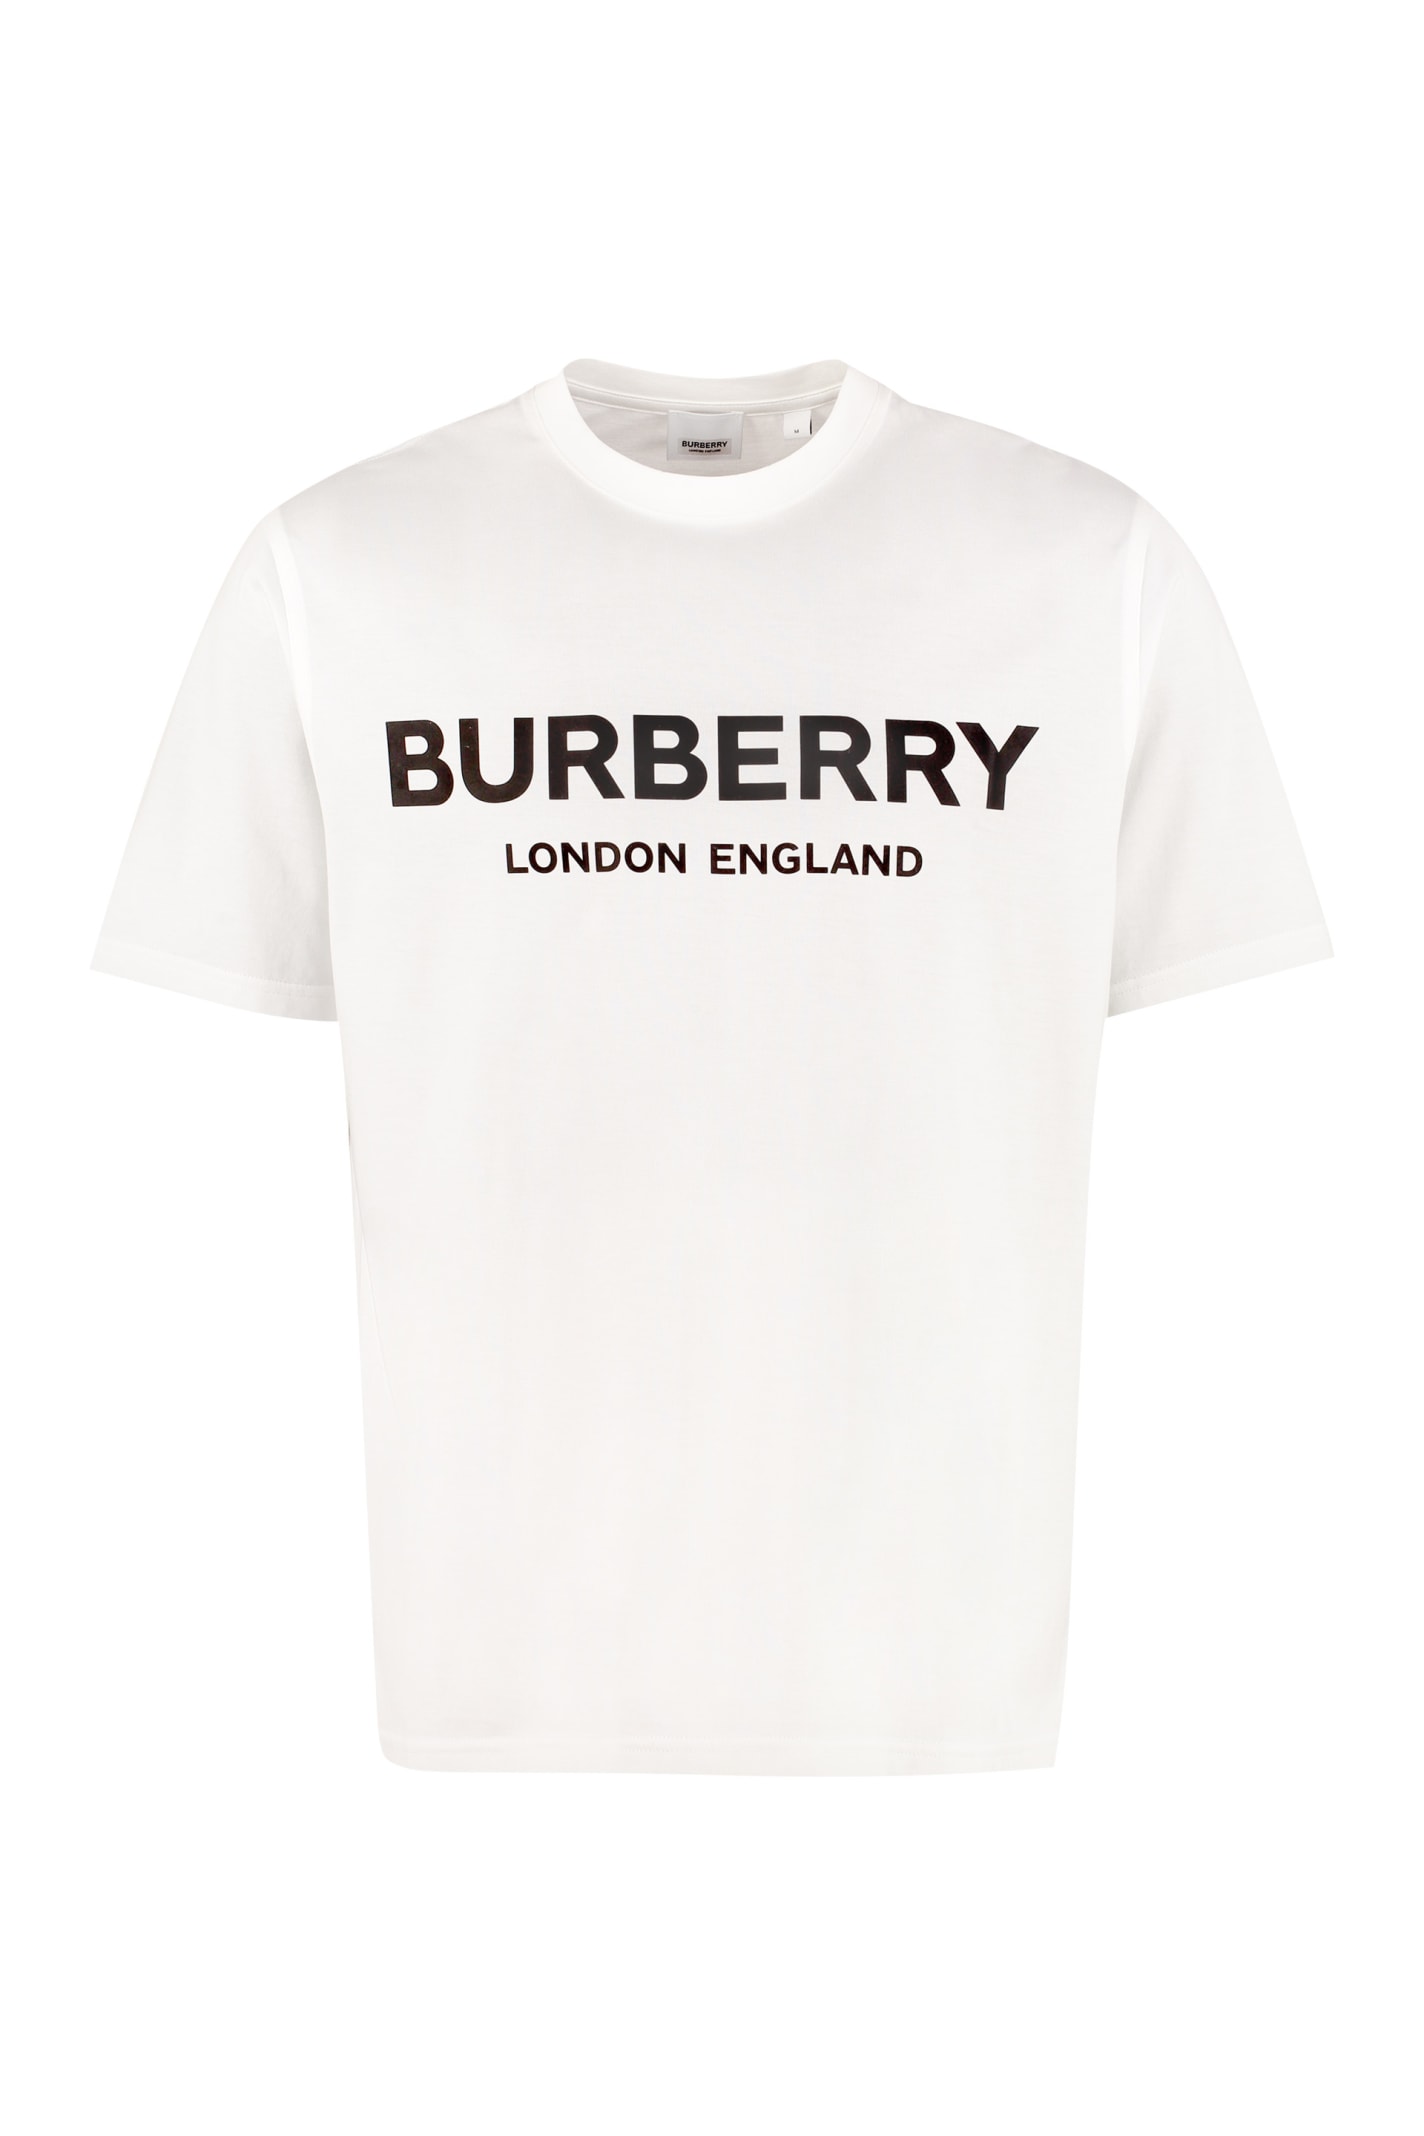 burberry round neck t shirt